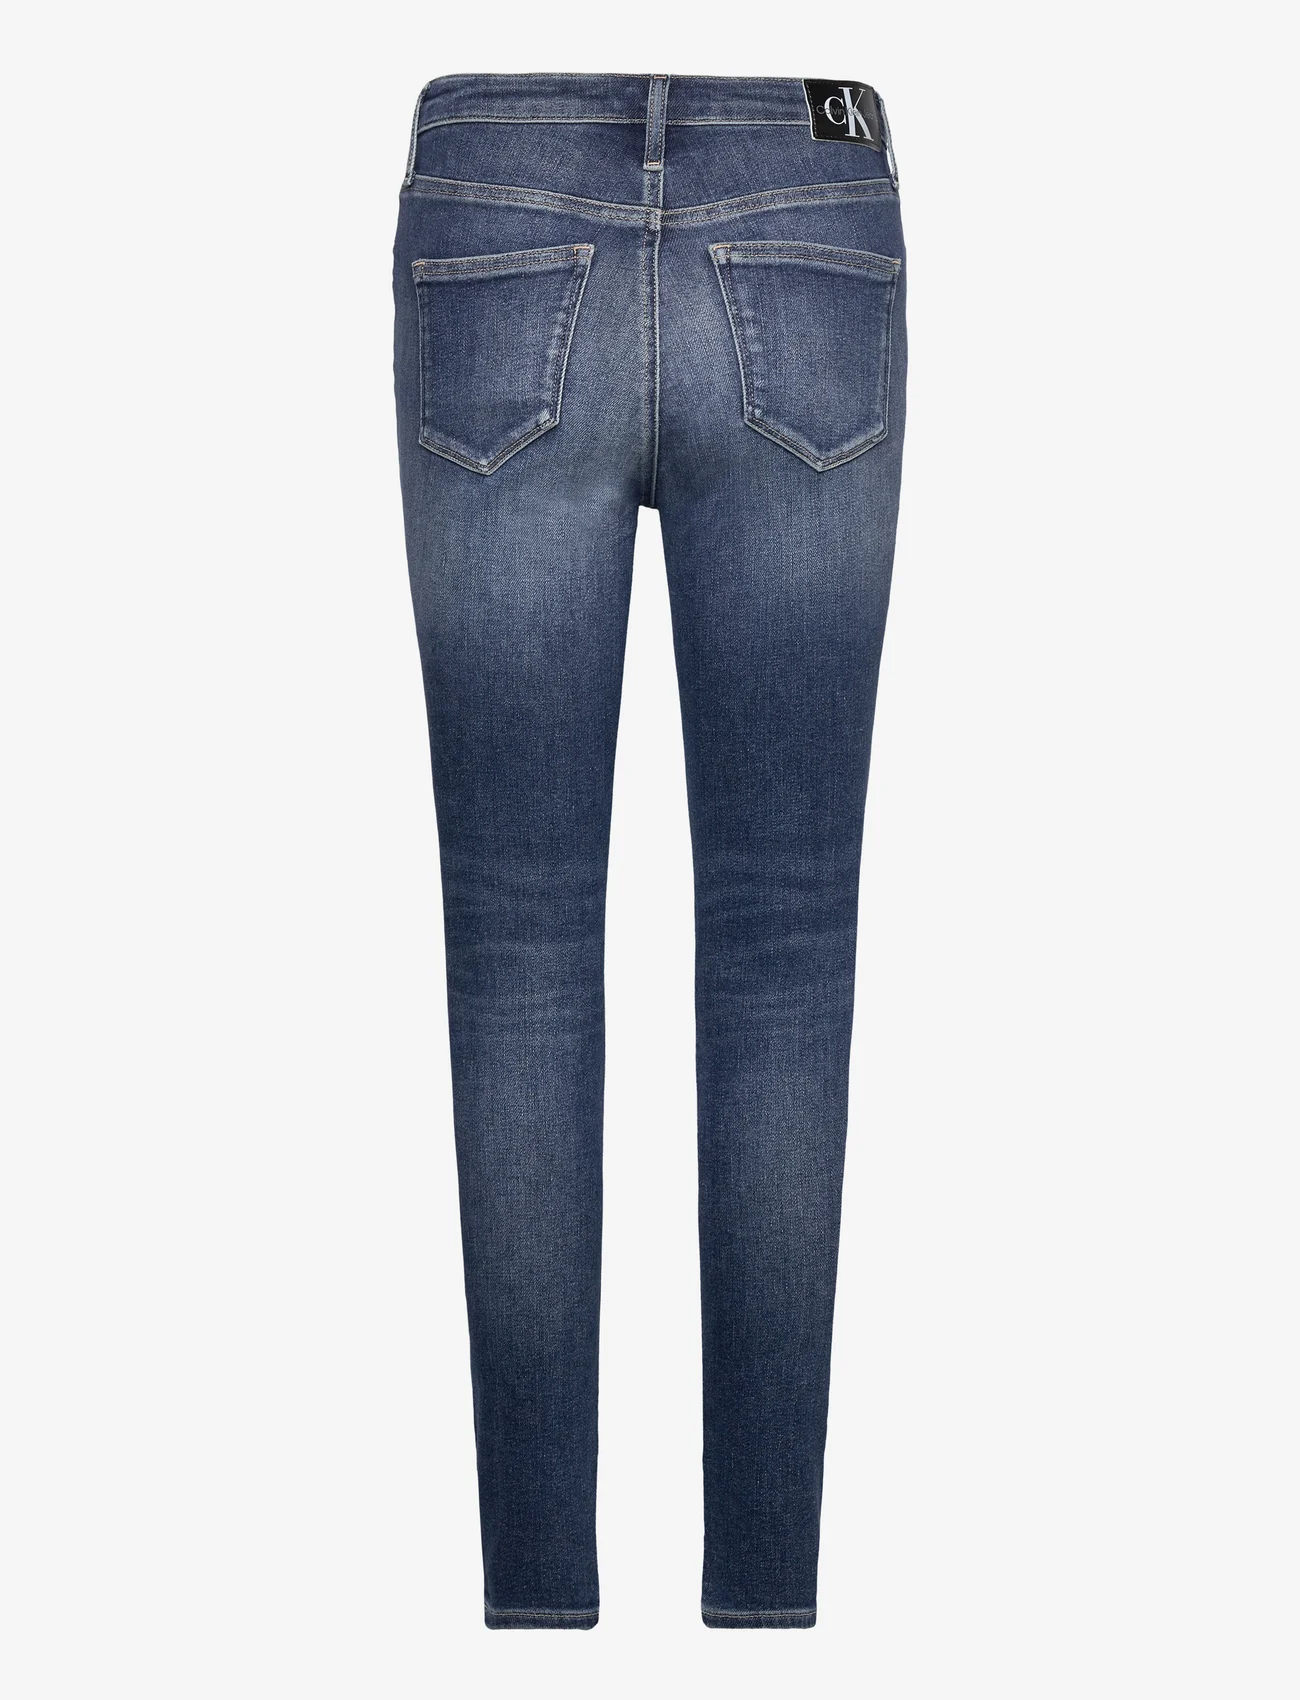 Calvin Klein Jeans - HIGH RISE SKINNY - skinny jeans - denim dark - 1